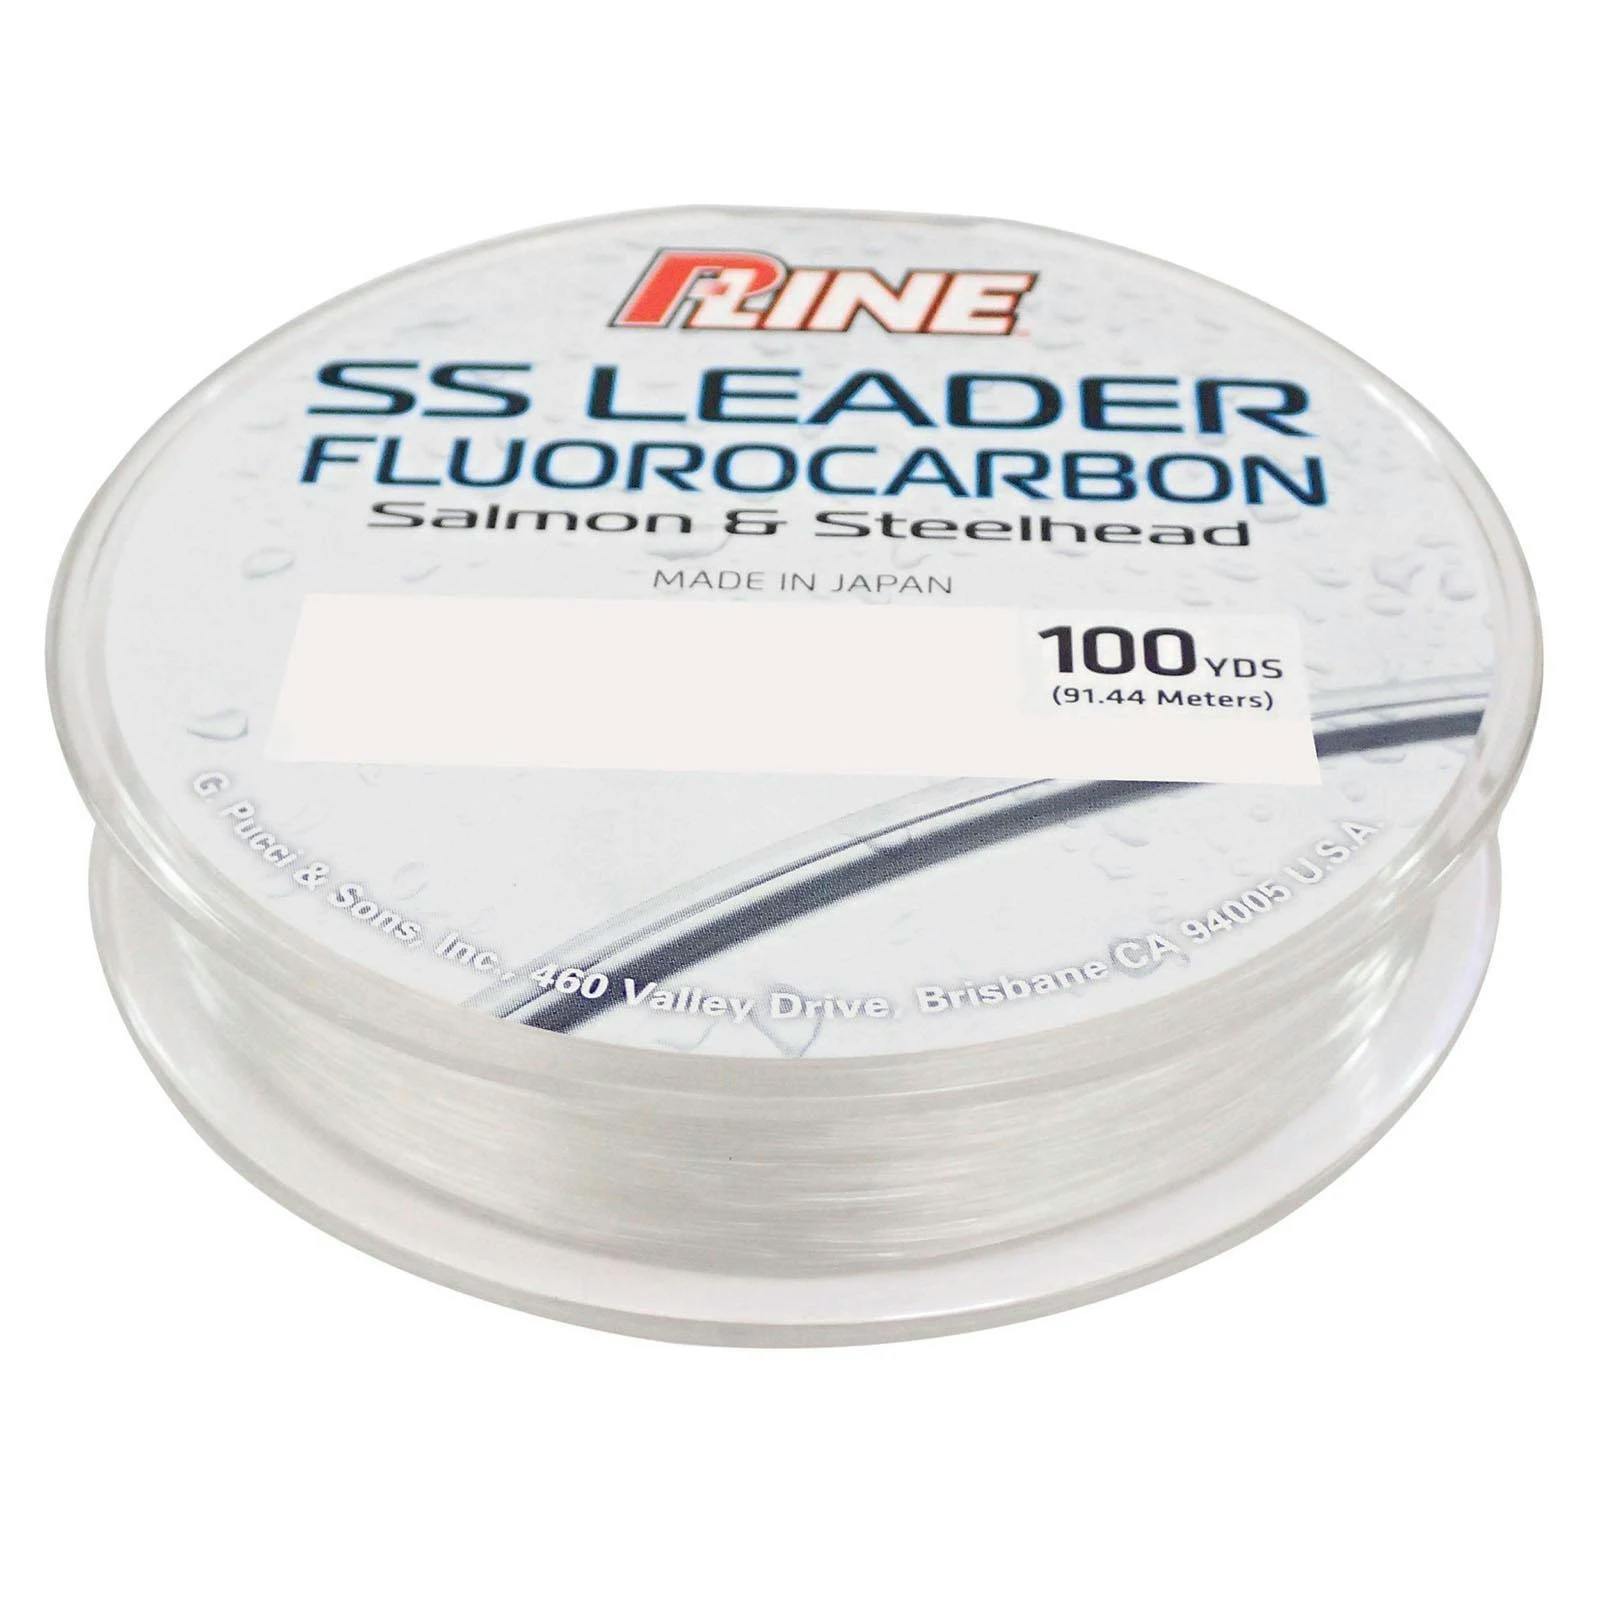 P-Line Salmon/Steelhead Fluorocarbon Leader 100 Yards 15 pound